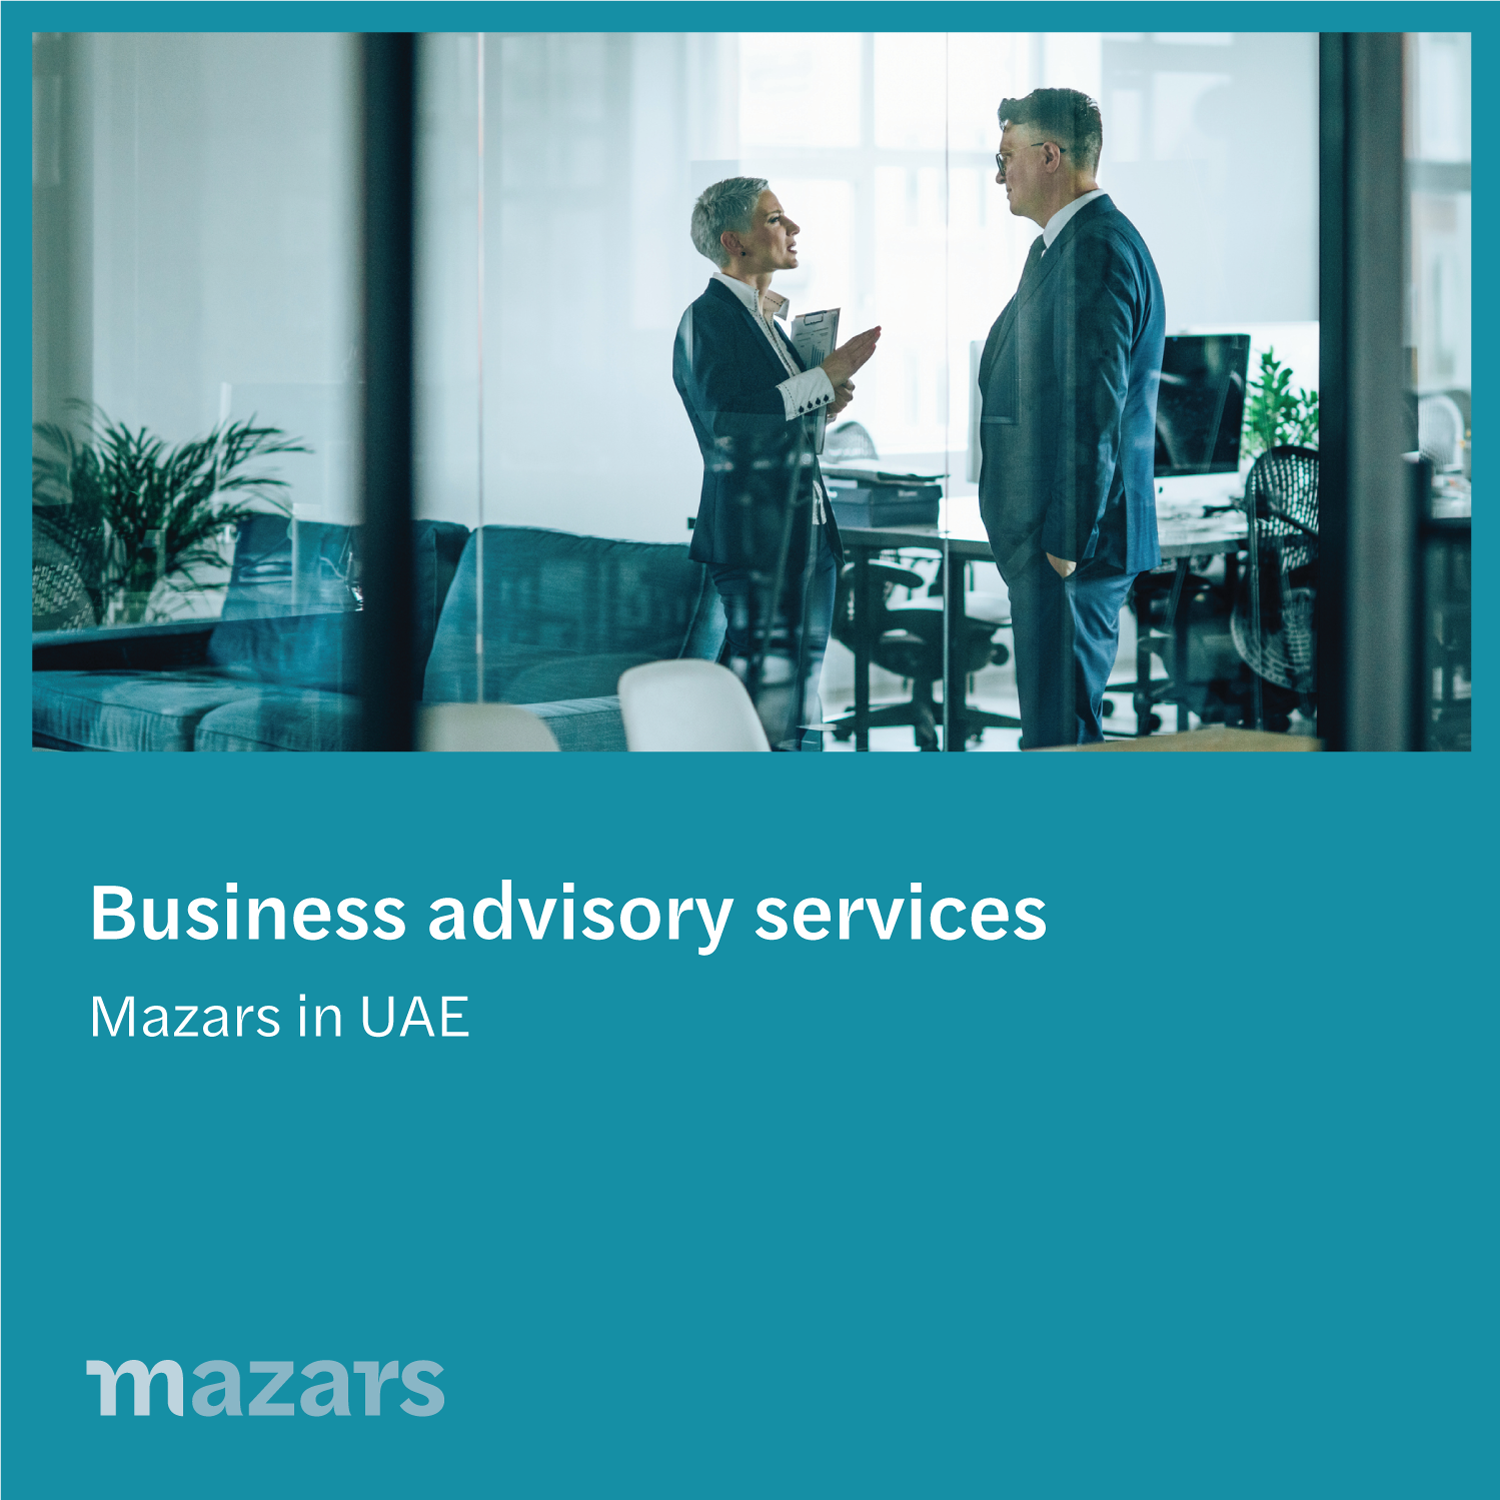 Business advisory services - Mazars in UAE